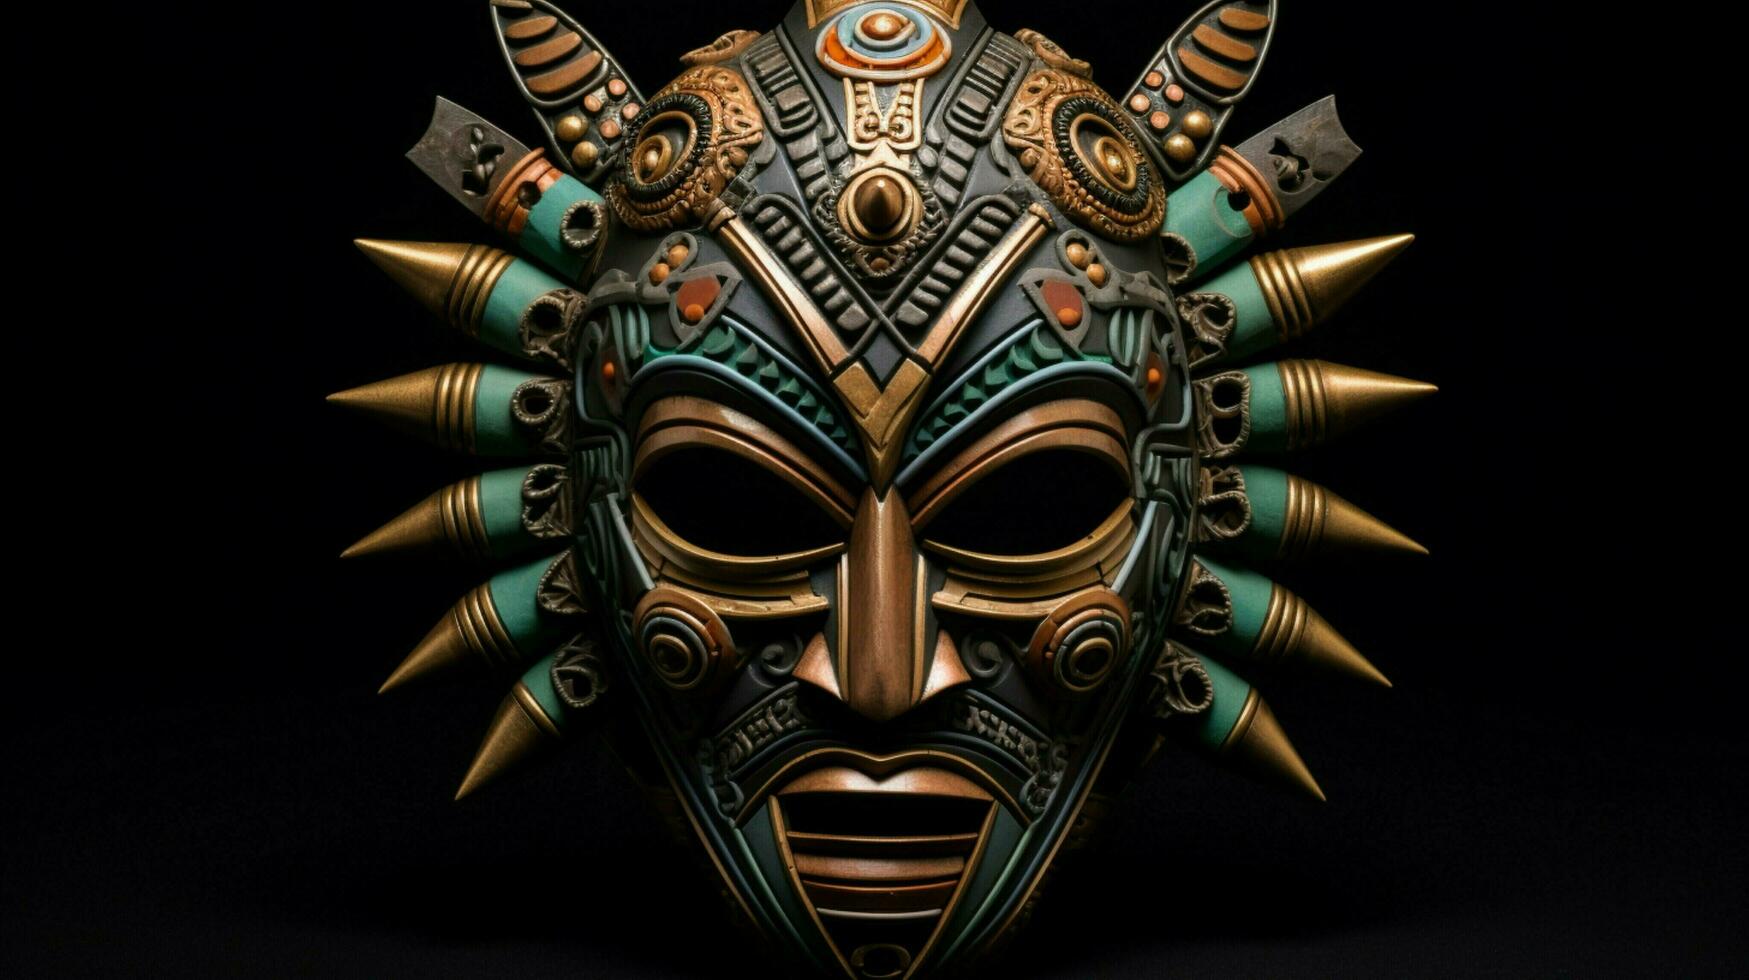 overladen Afrikaanse masker vitrines oude tribal cultuur foto